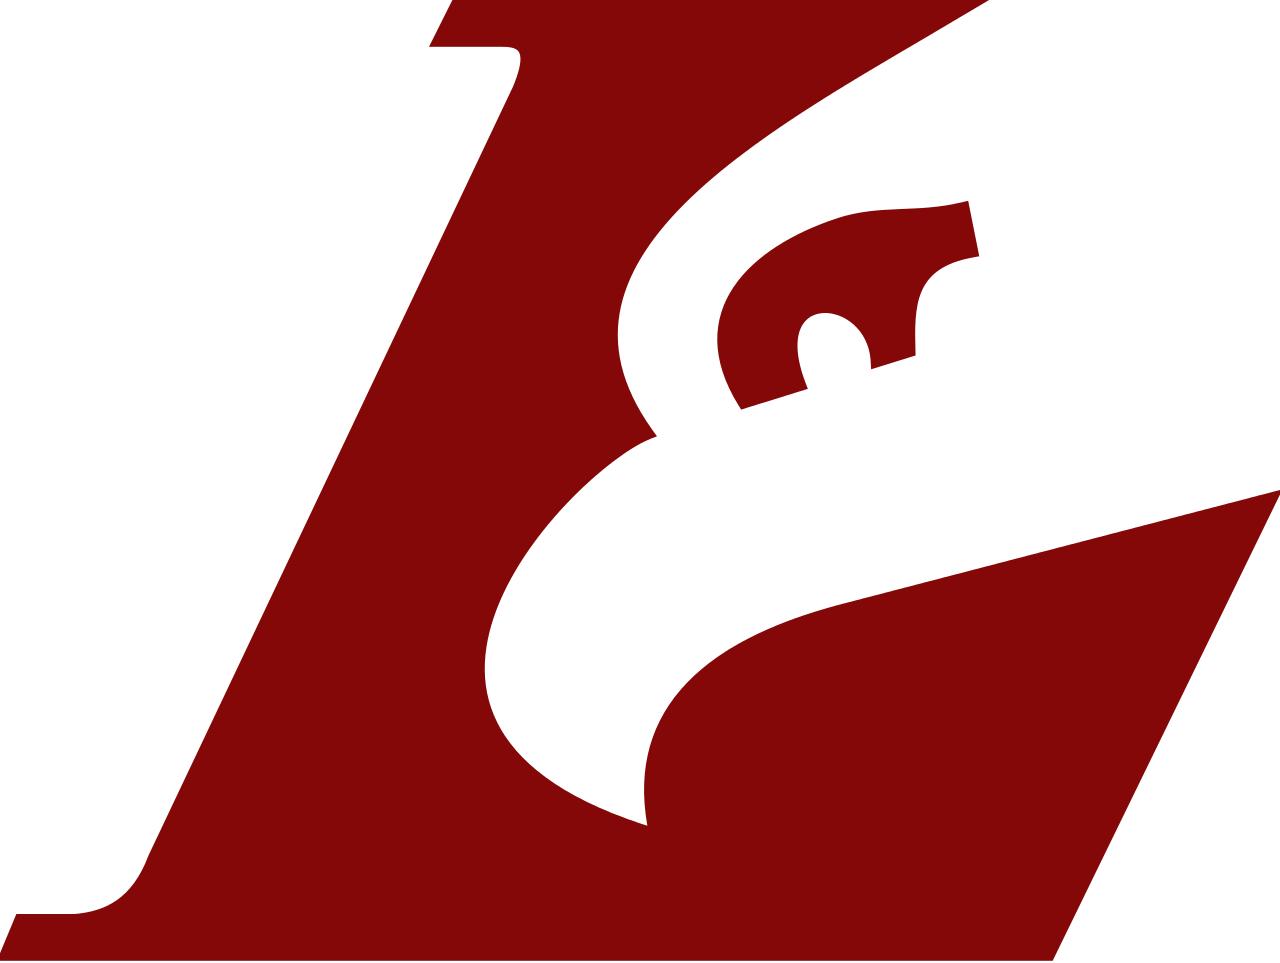 University of Wisconsin - LaCrosse logo